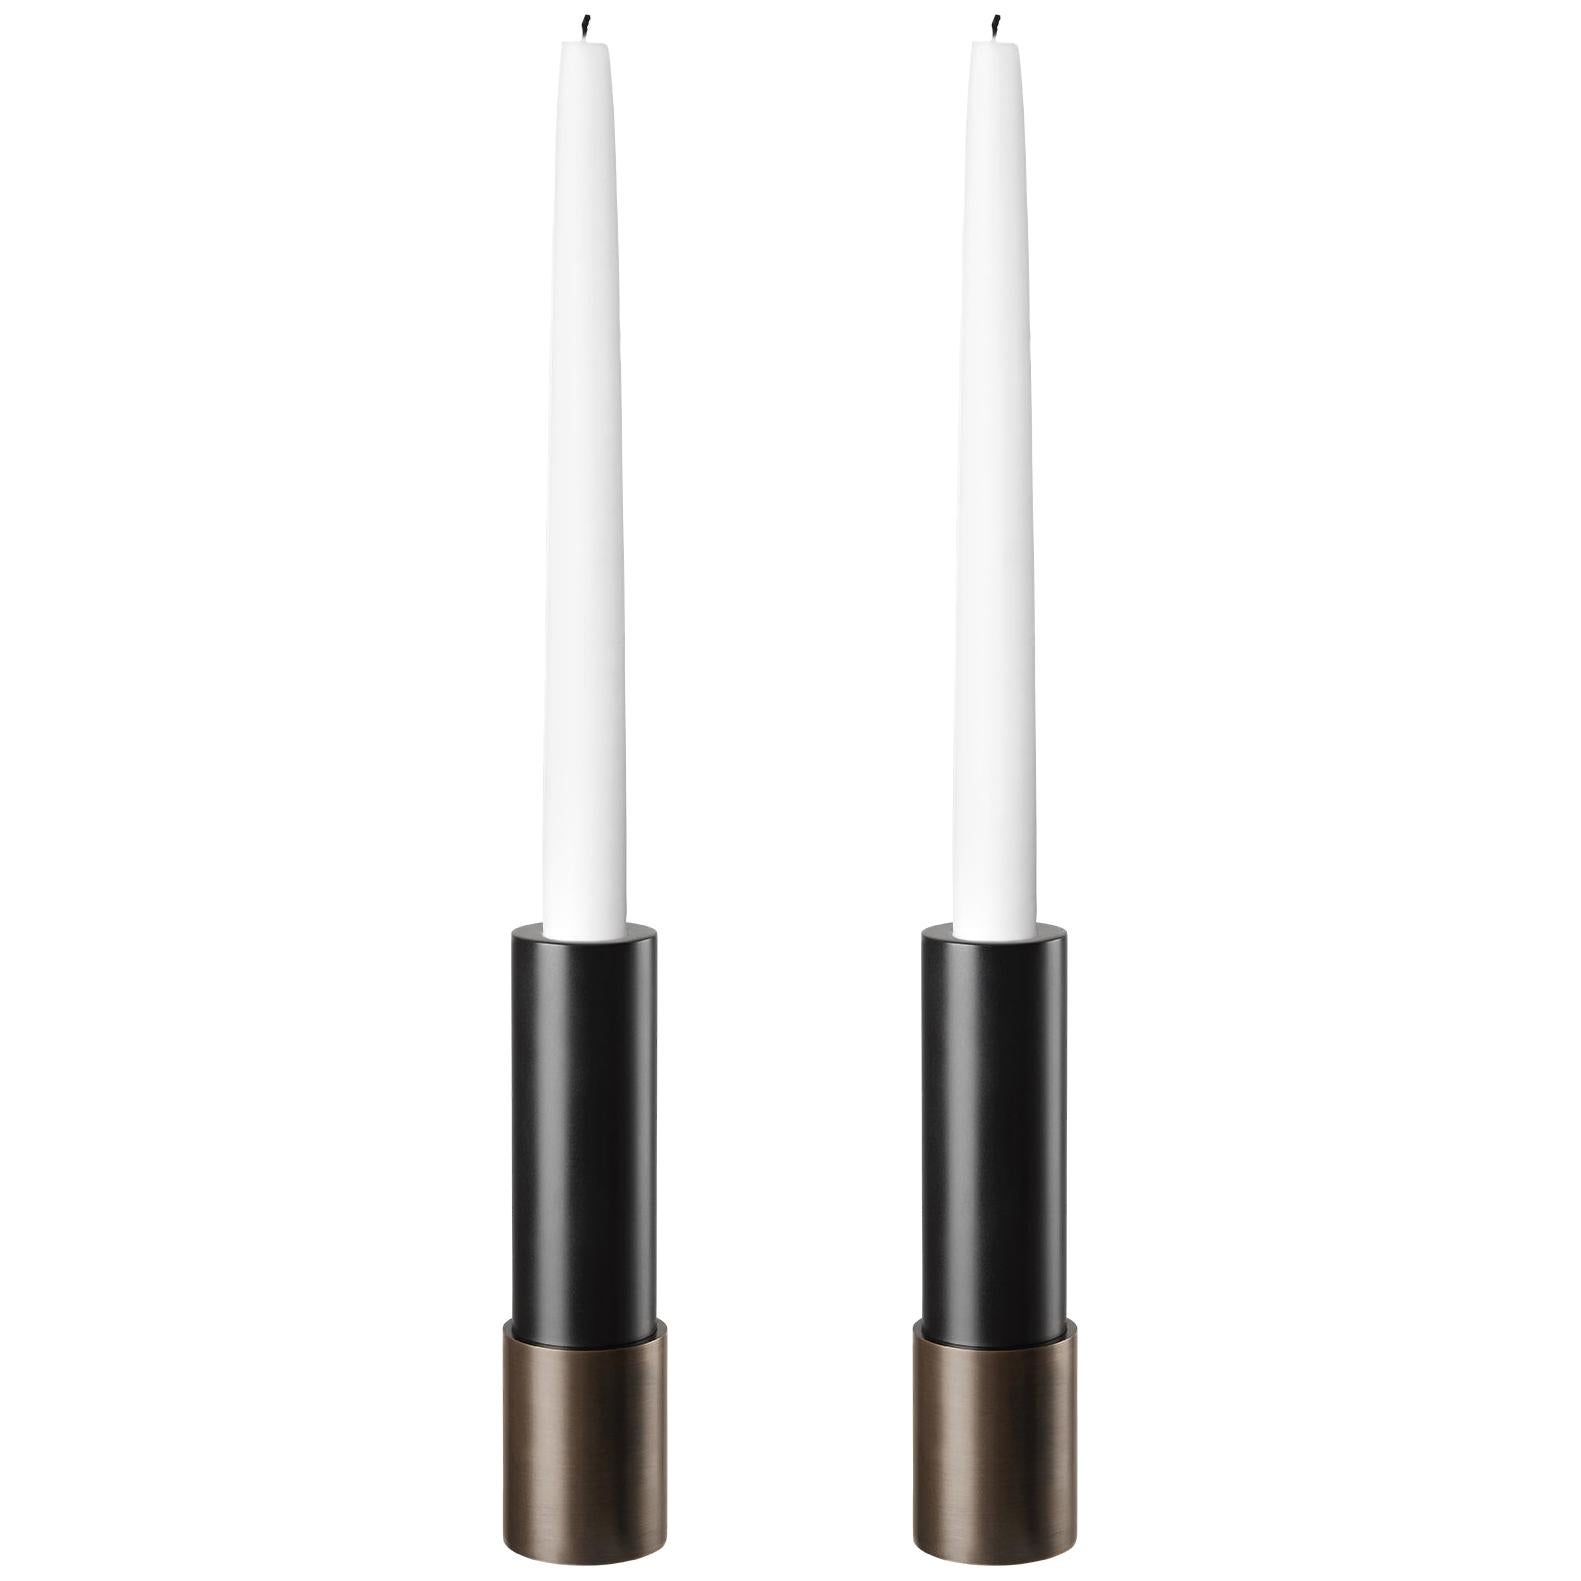 Pair of Candlesticks Model #17 by Space Copenhagen for Gubi